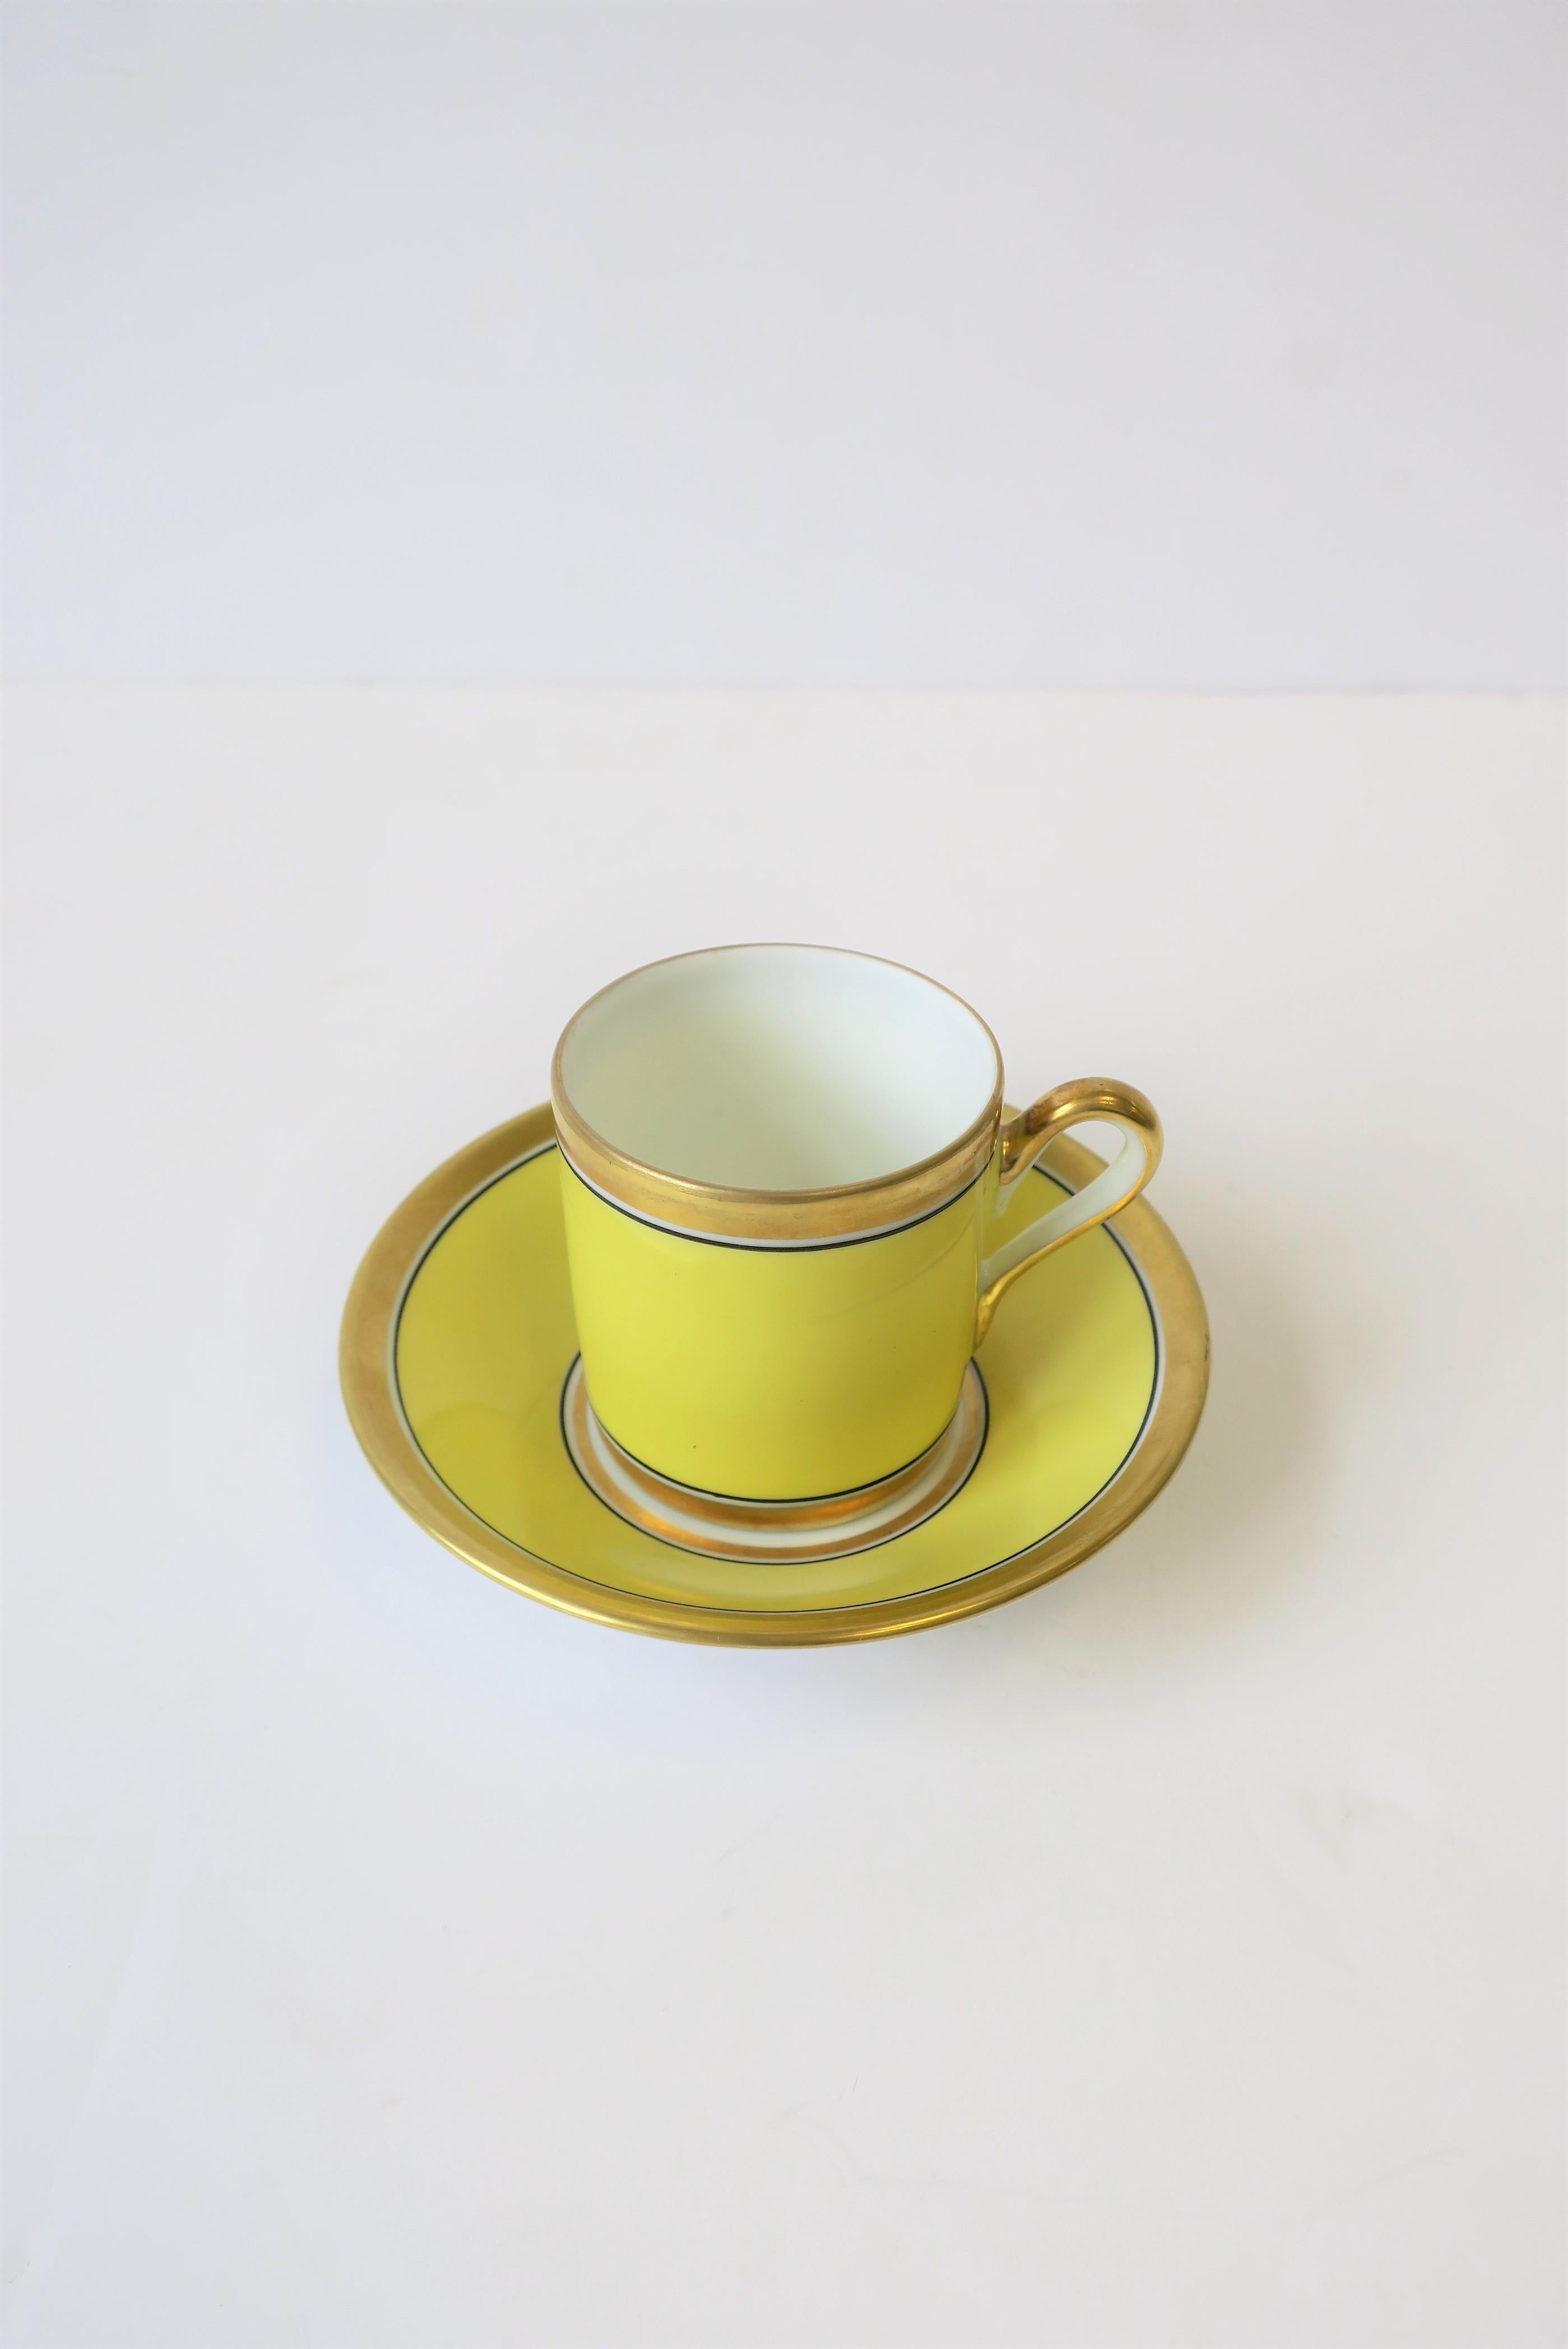 yellow tea cups